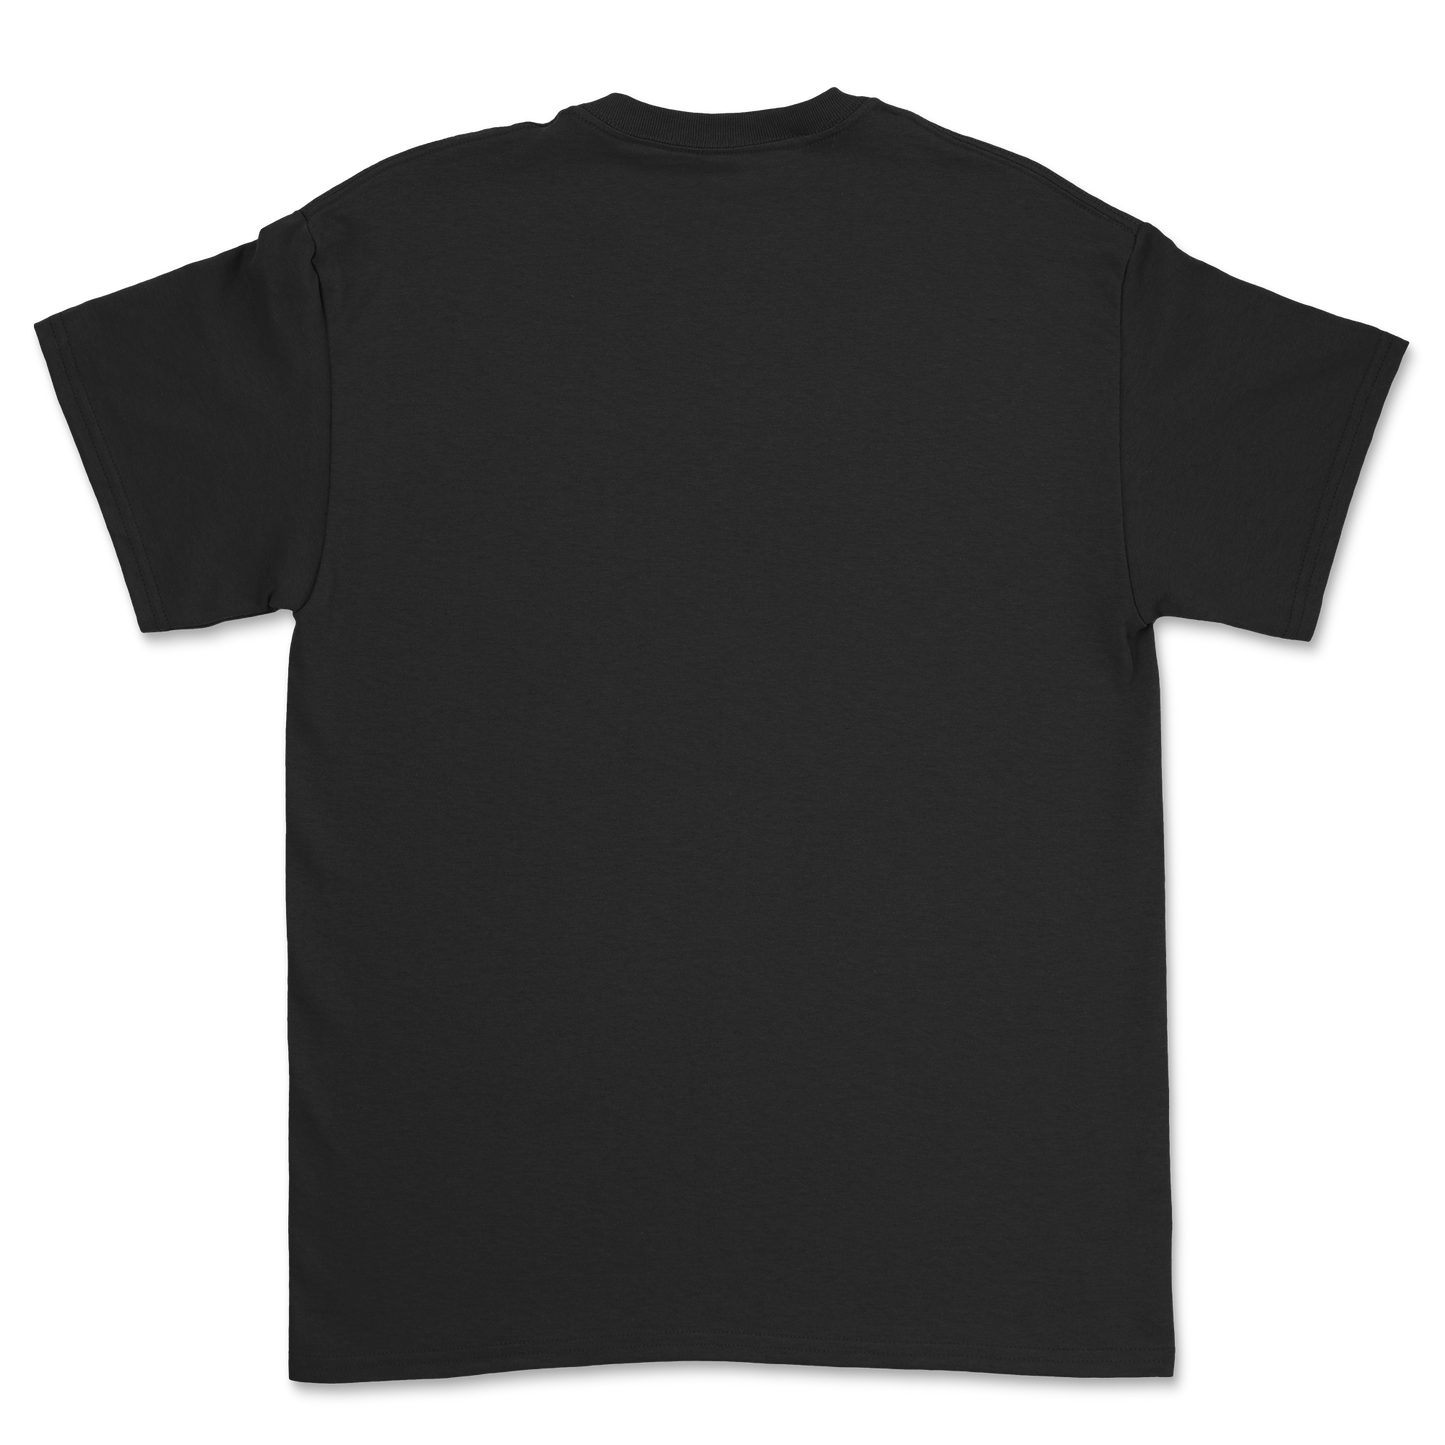 Make the Cut T-Shirt Black